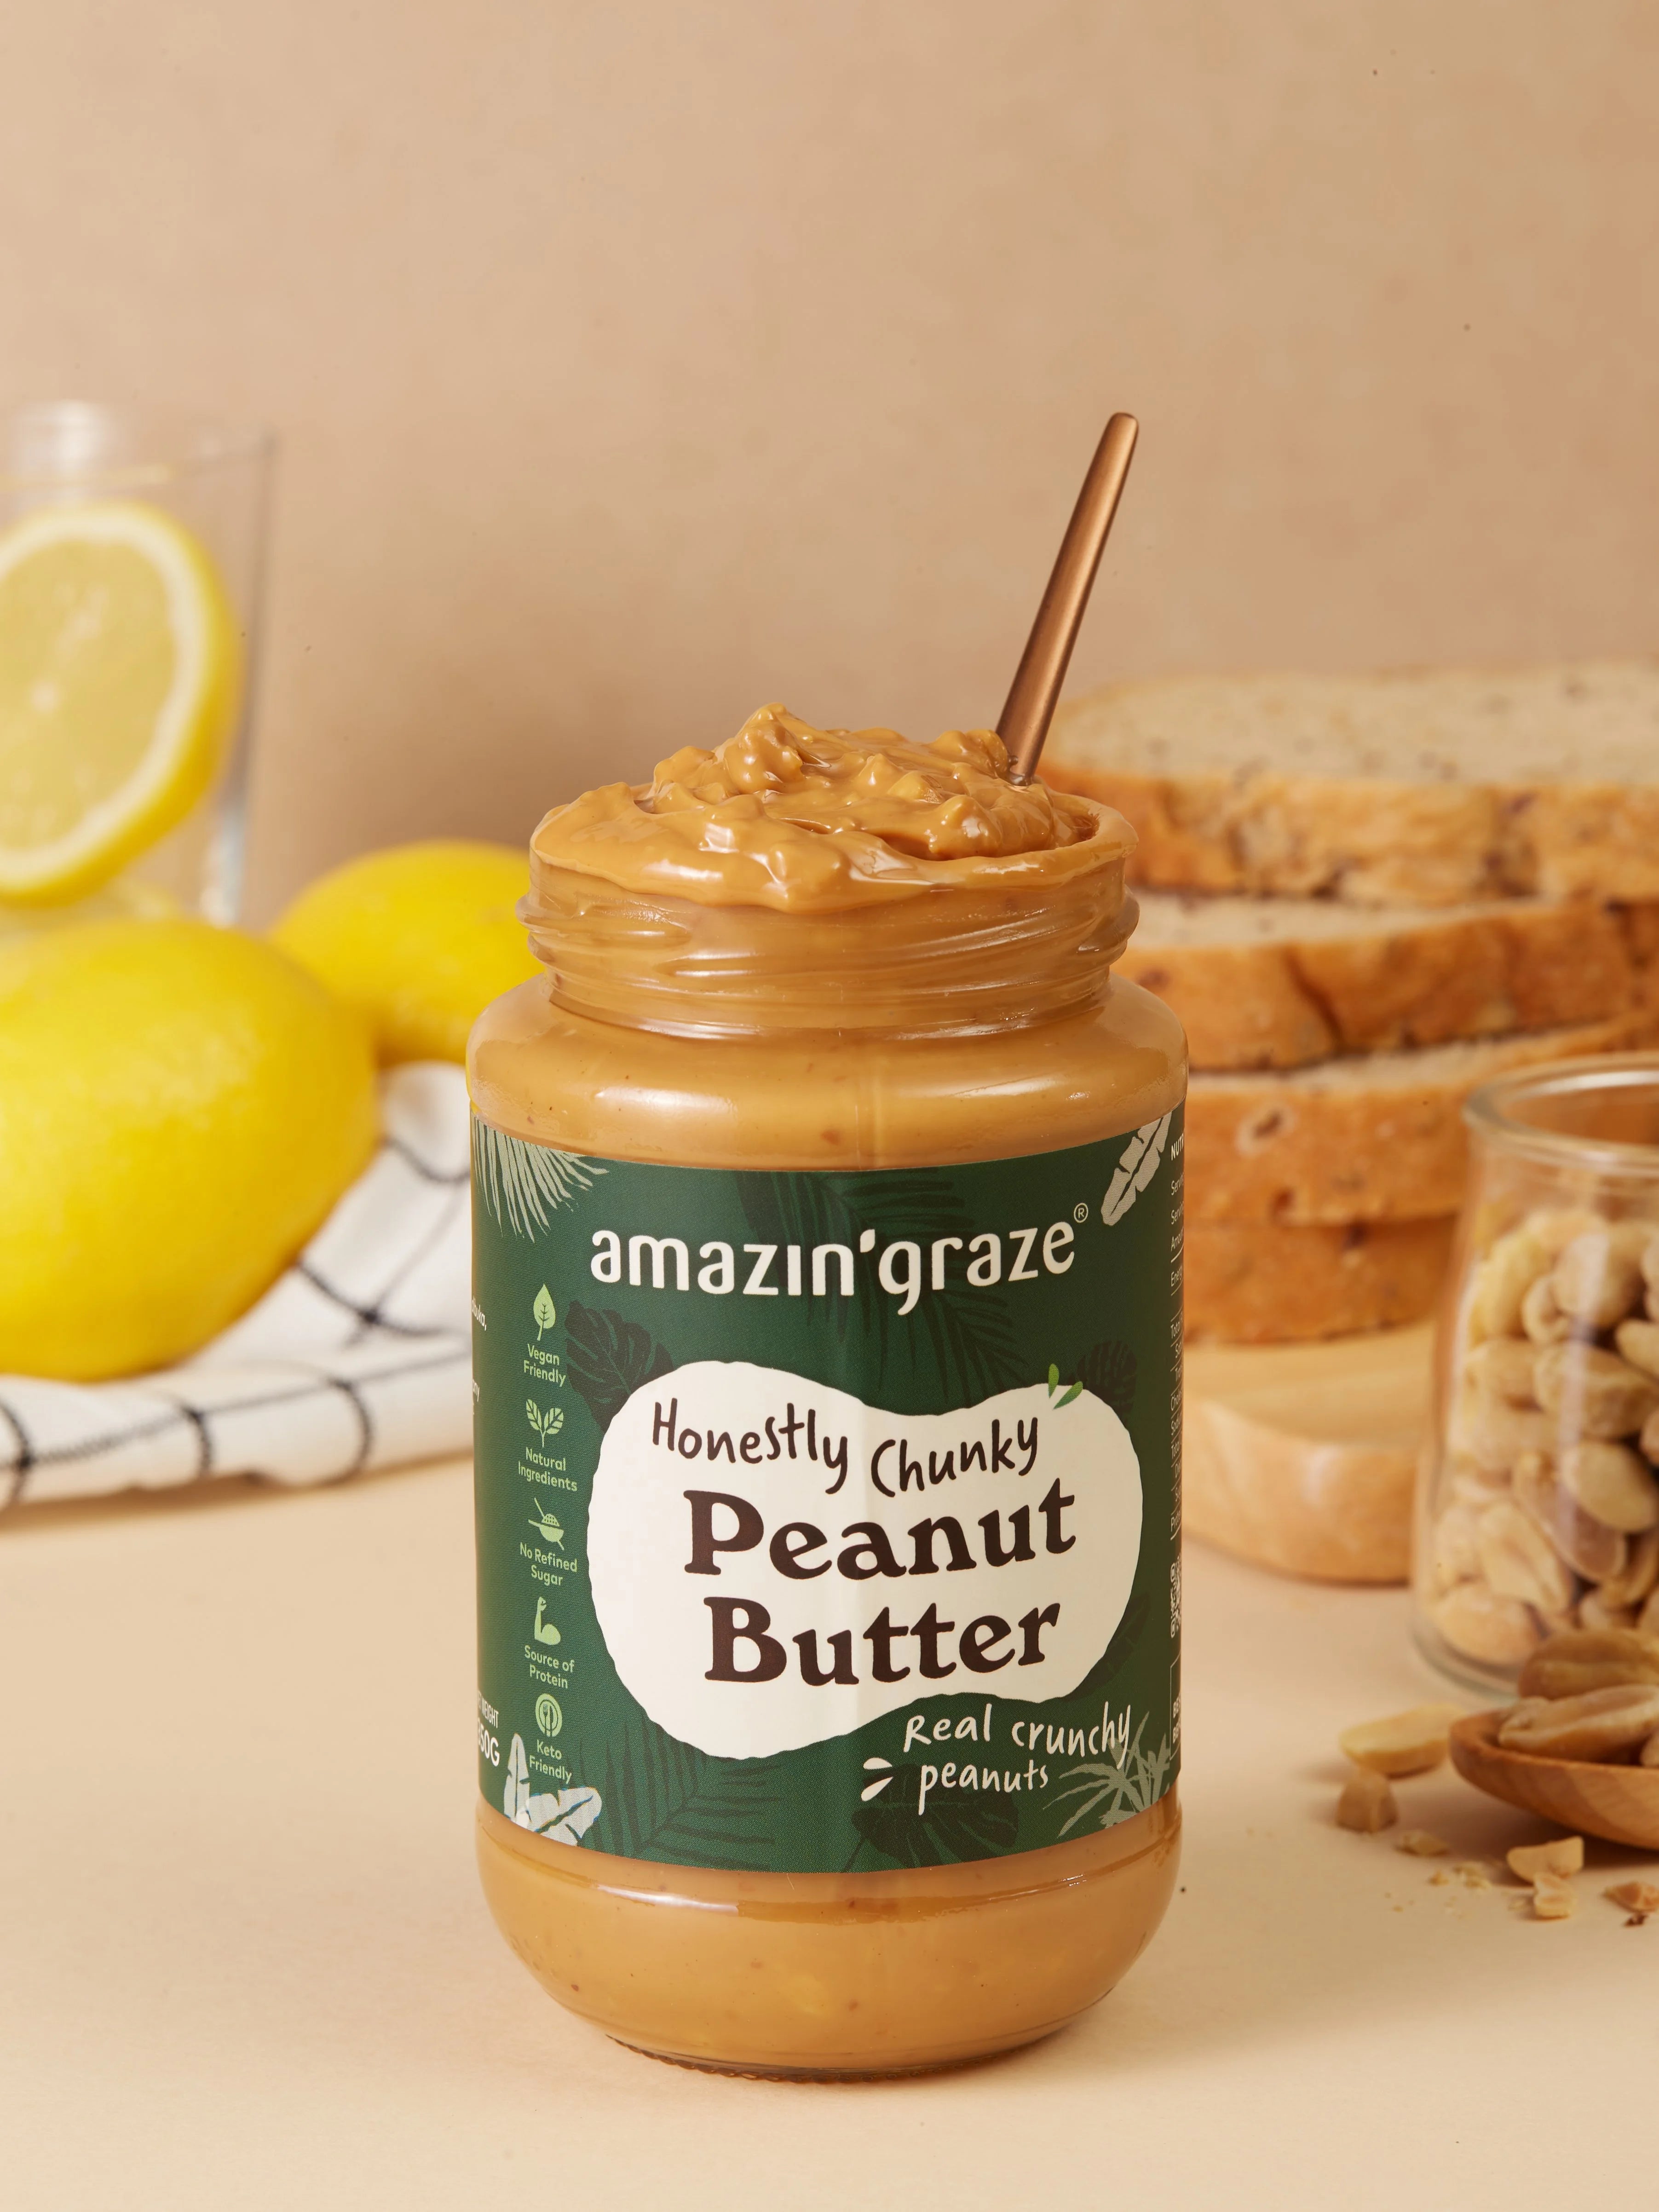 Crunchy Peanut Butter [Salt & Sugar Free] - Amazin' Graze Malaysia